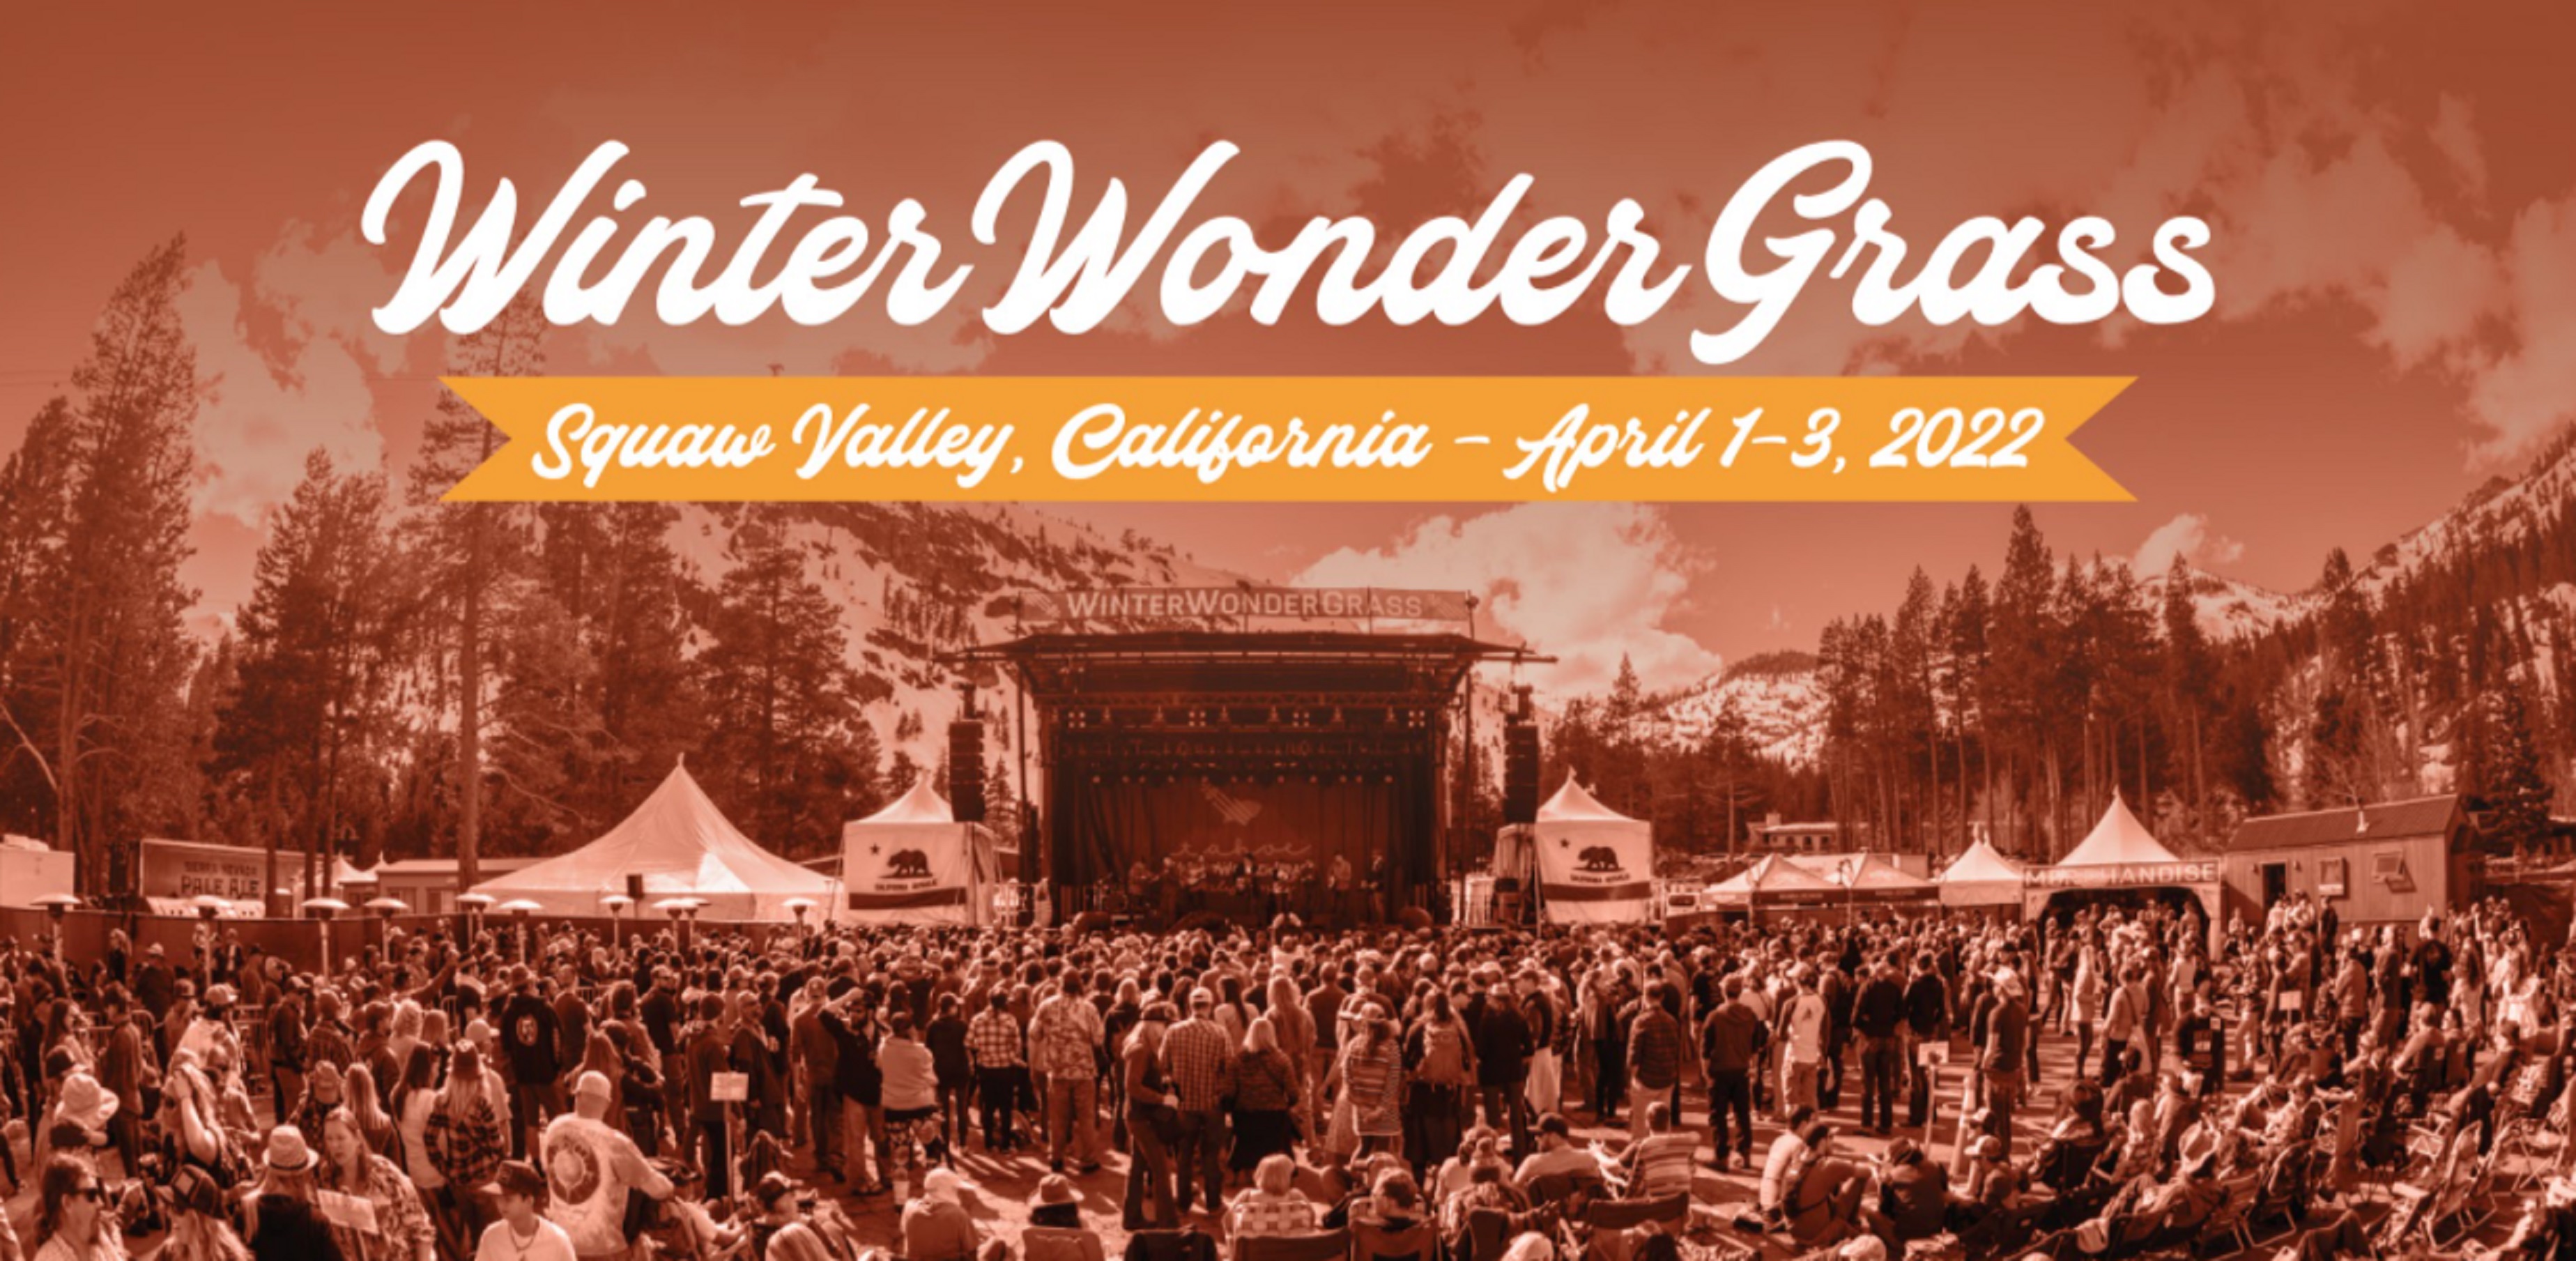 WinterWonderGrass Announces Postponement of Squaw Valley, CA Festival to April 1-3, 2022